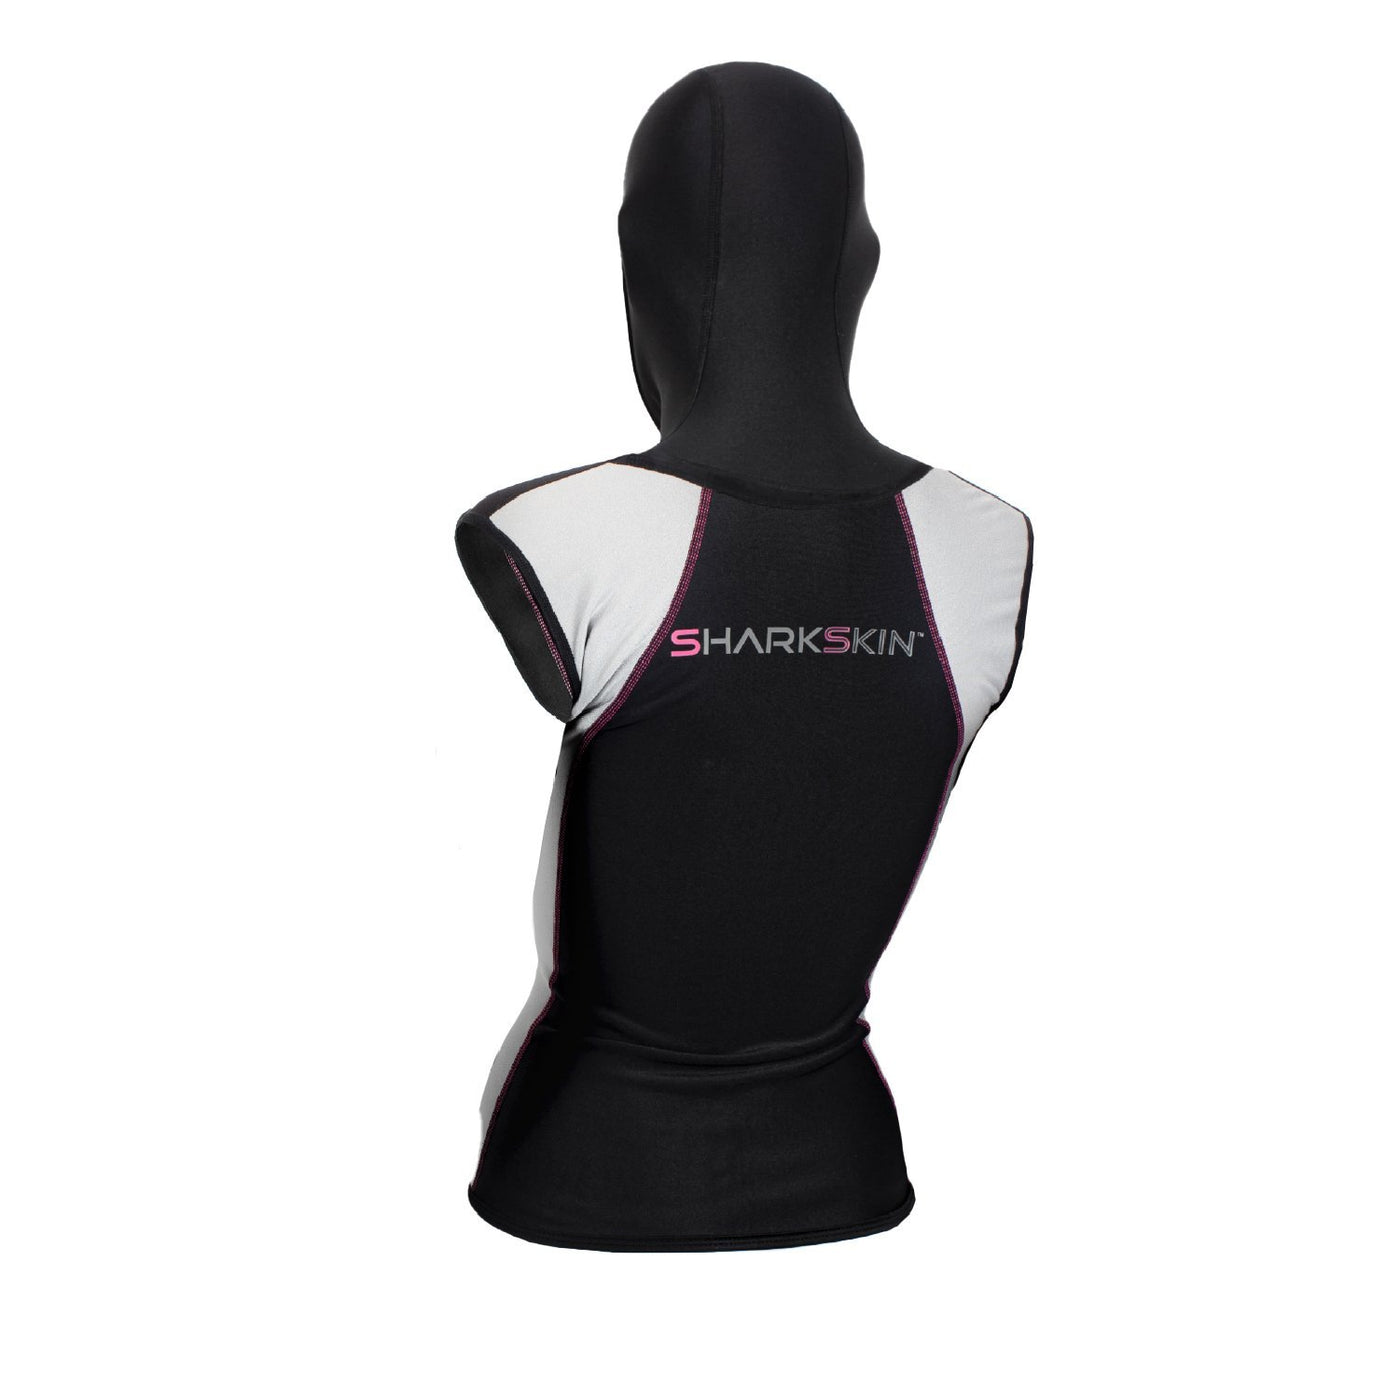 Sharkskin Chillproof Sleeveless Vest with Hood Full Zip - Womens